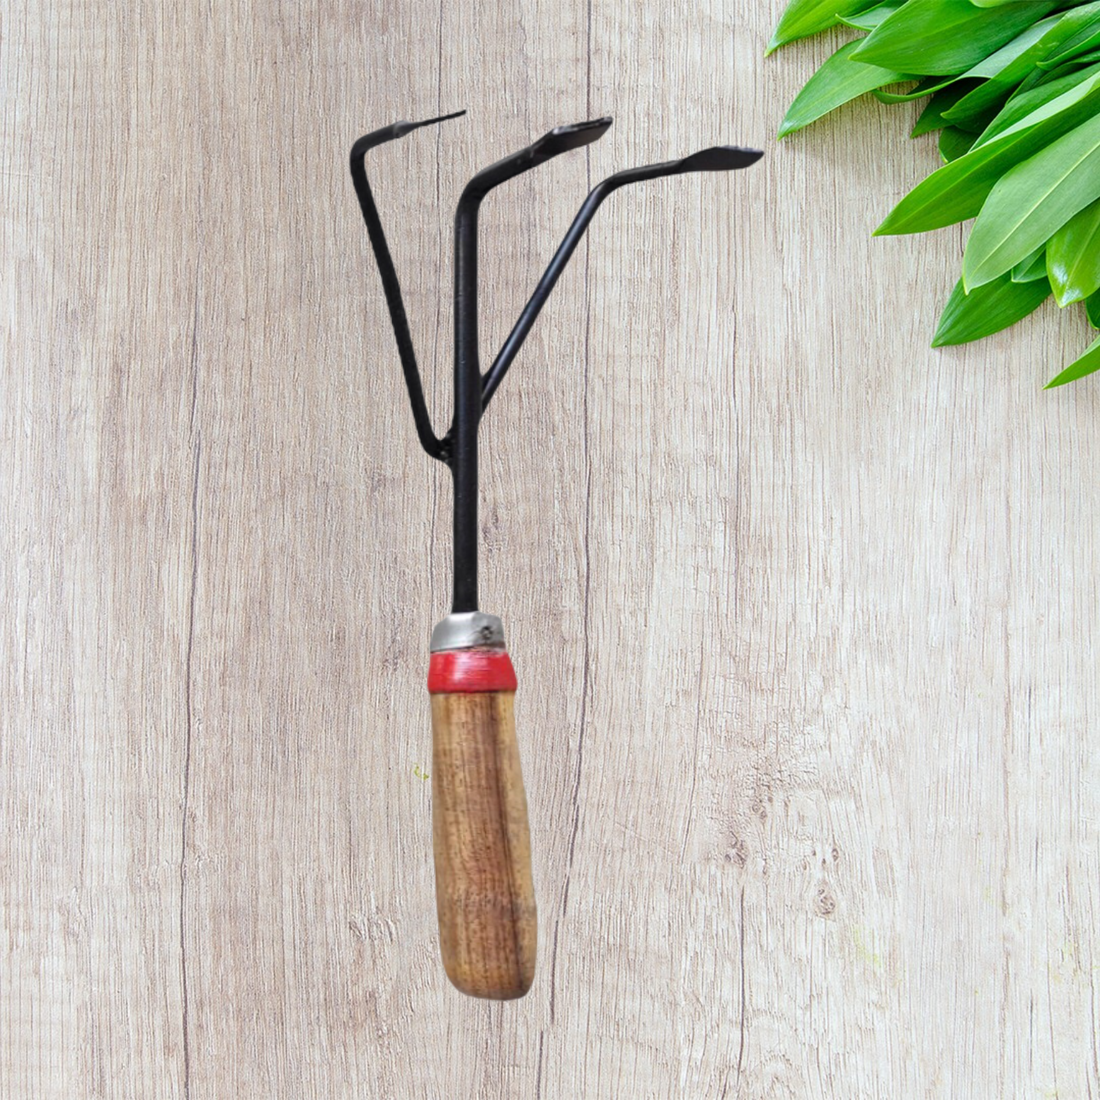 Hand Cultivator Gardening Tool - Wooden Handle